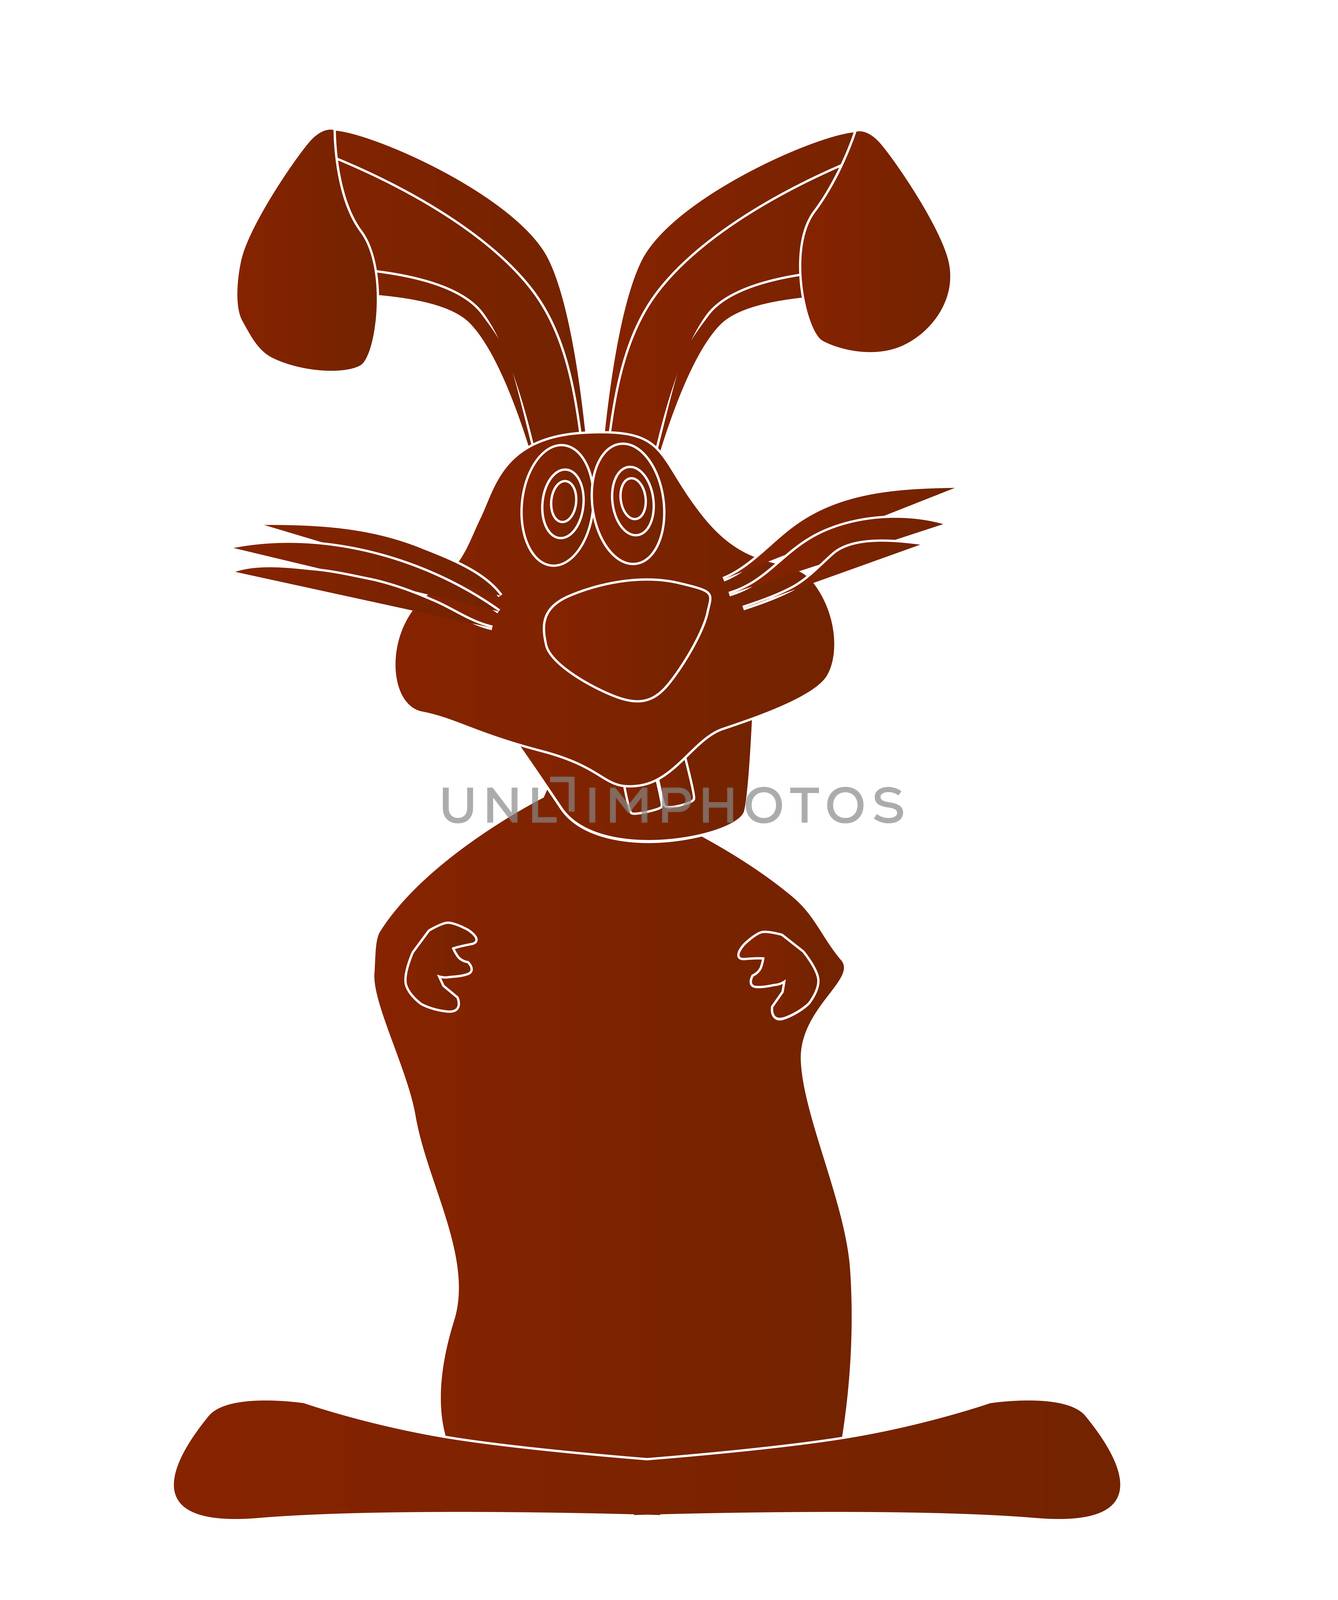 The Chocolate Bunny by Bigalbaloo